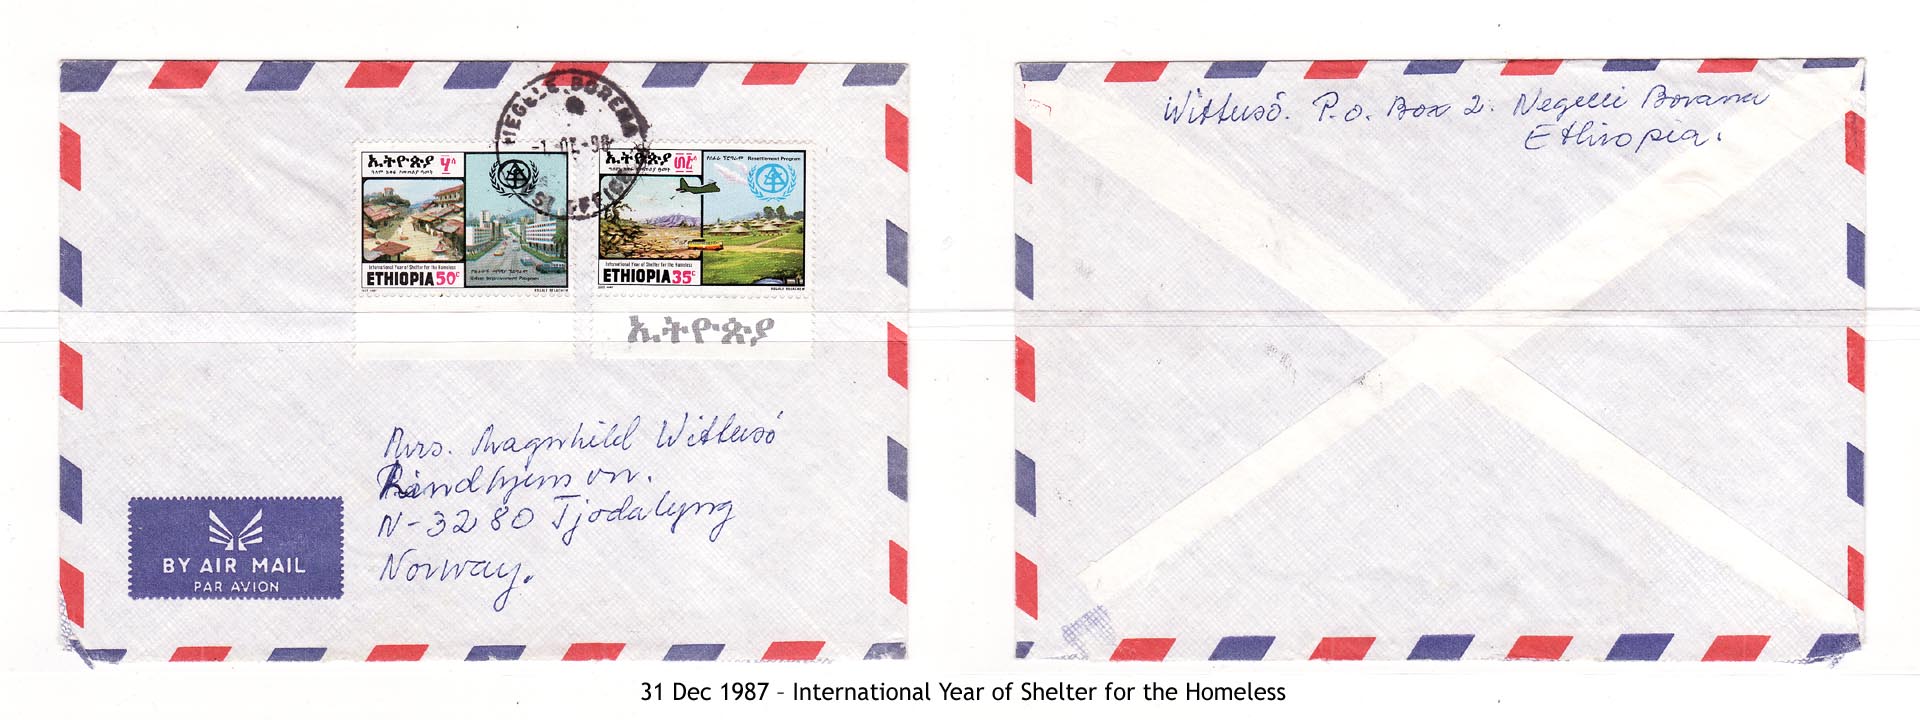 19871231 – International Year of Shelter for the Homeless